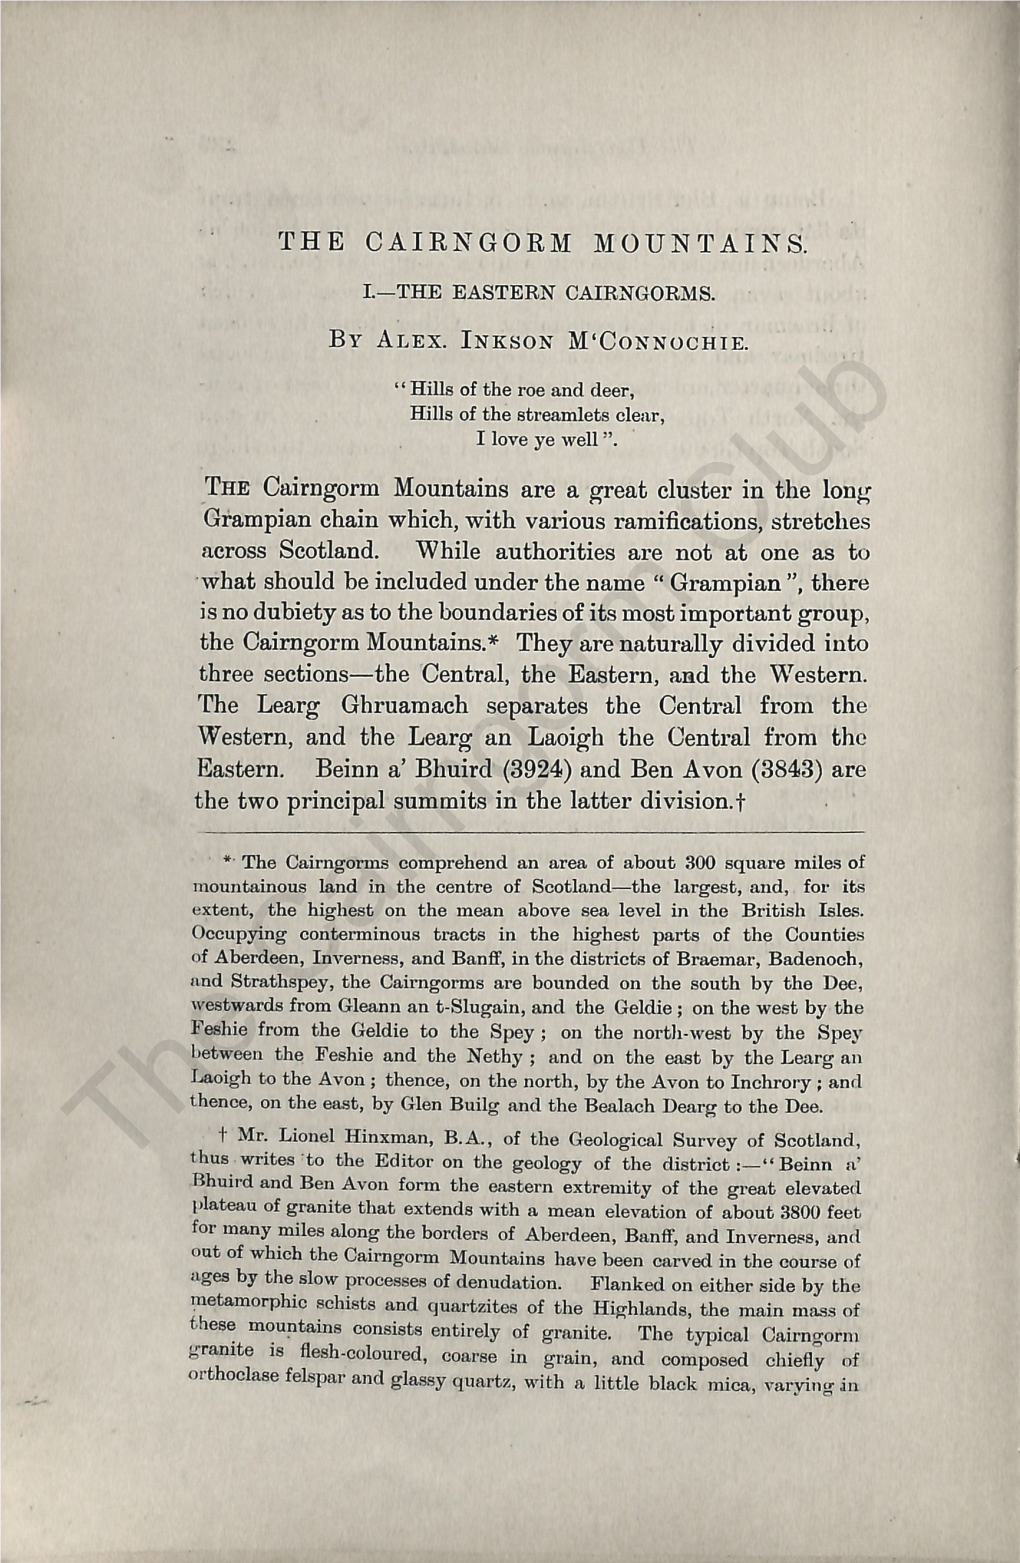 The Cairngorm Club Journal 004, 1895